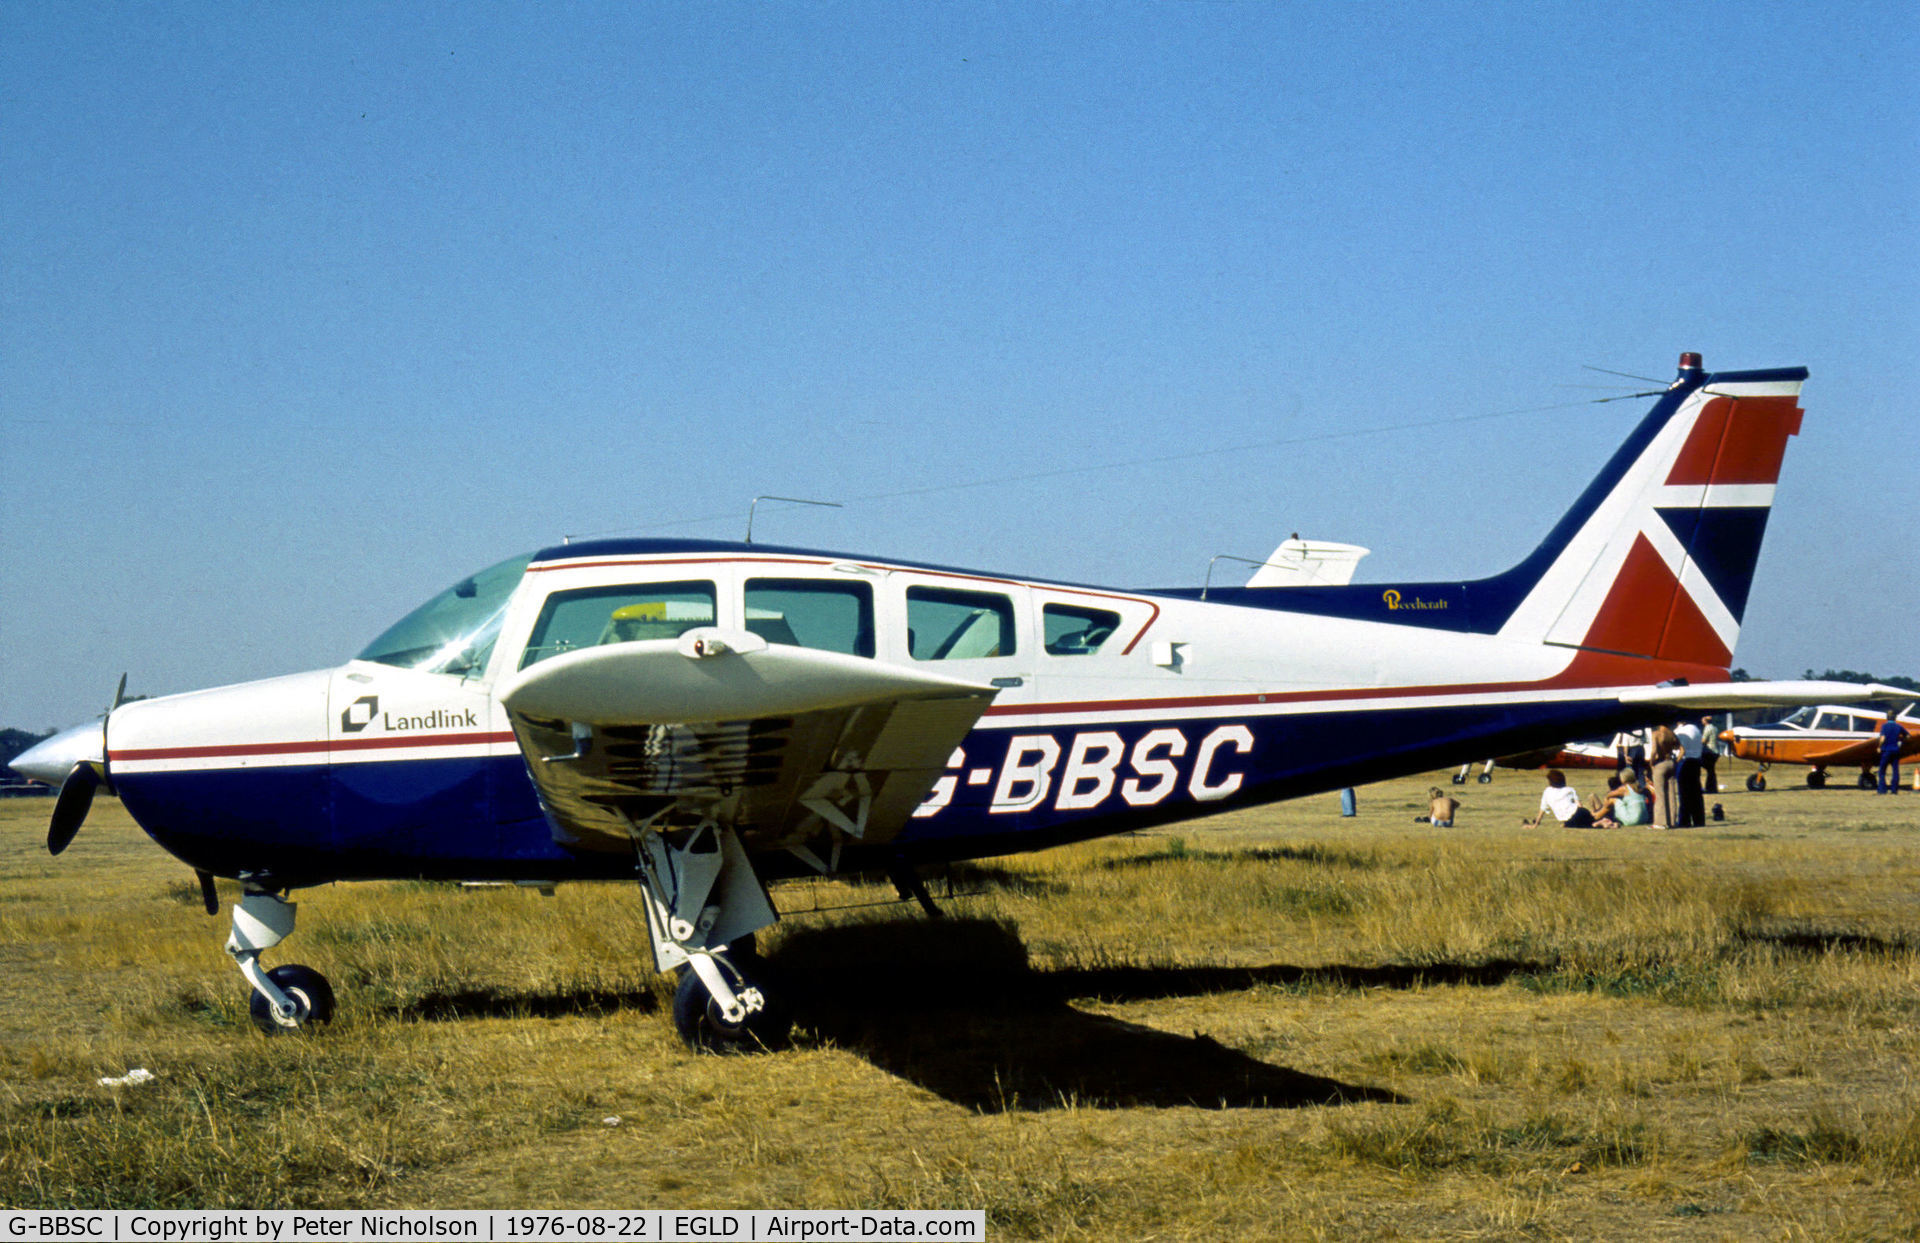 G-BBSC, 1973 Beech B24R Sierra C/N MC-217, Beech 24R Sierra as seen at Denham Aerodrome in the Summer of 1976.